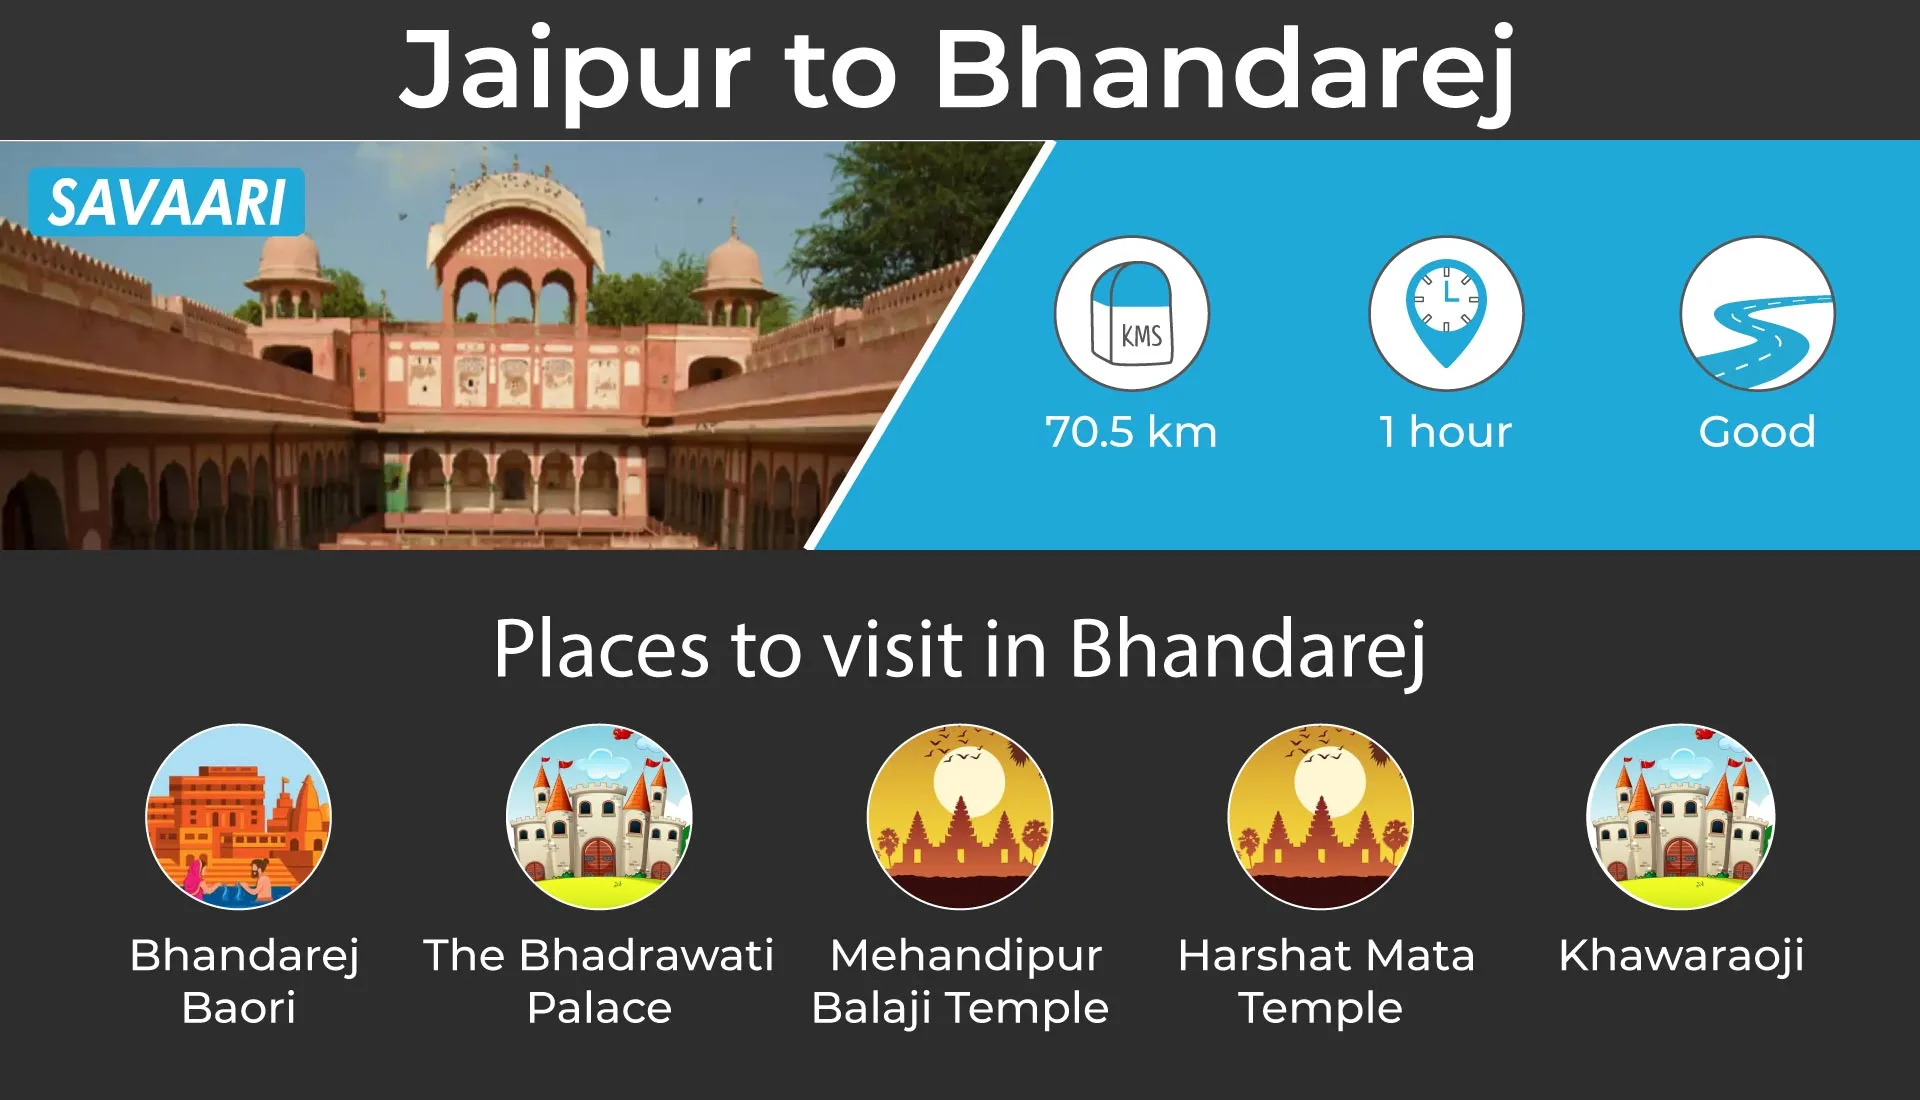 Jaipur to bhandaraj road trip